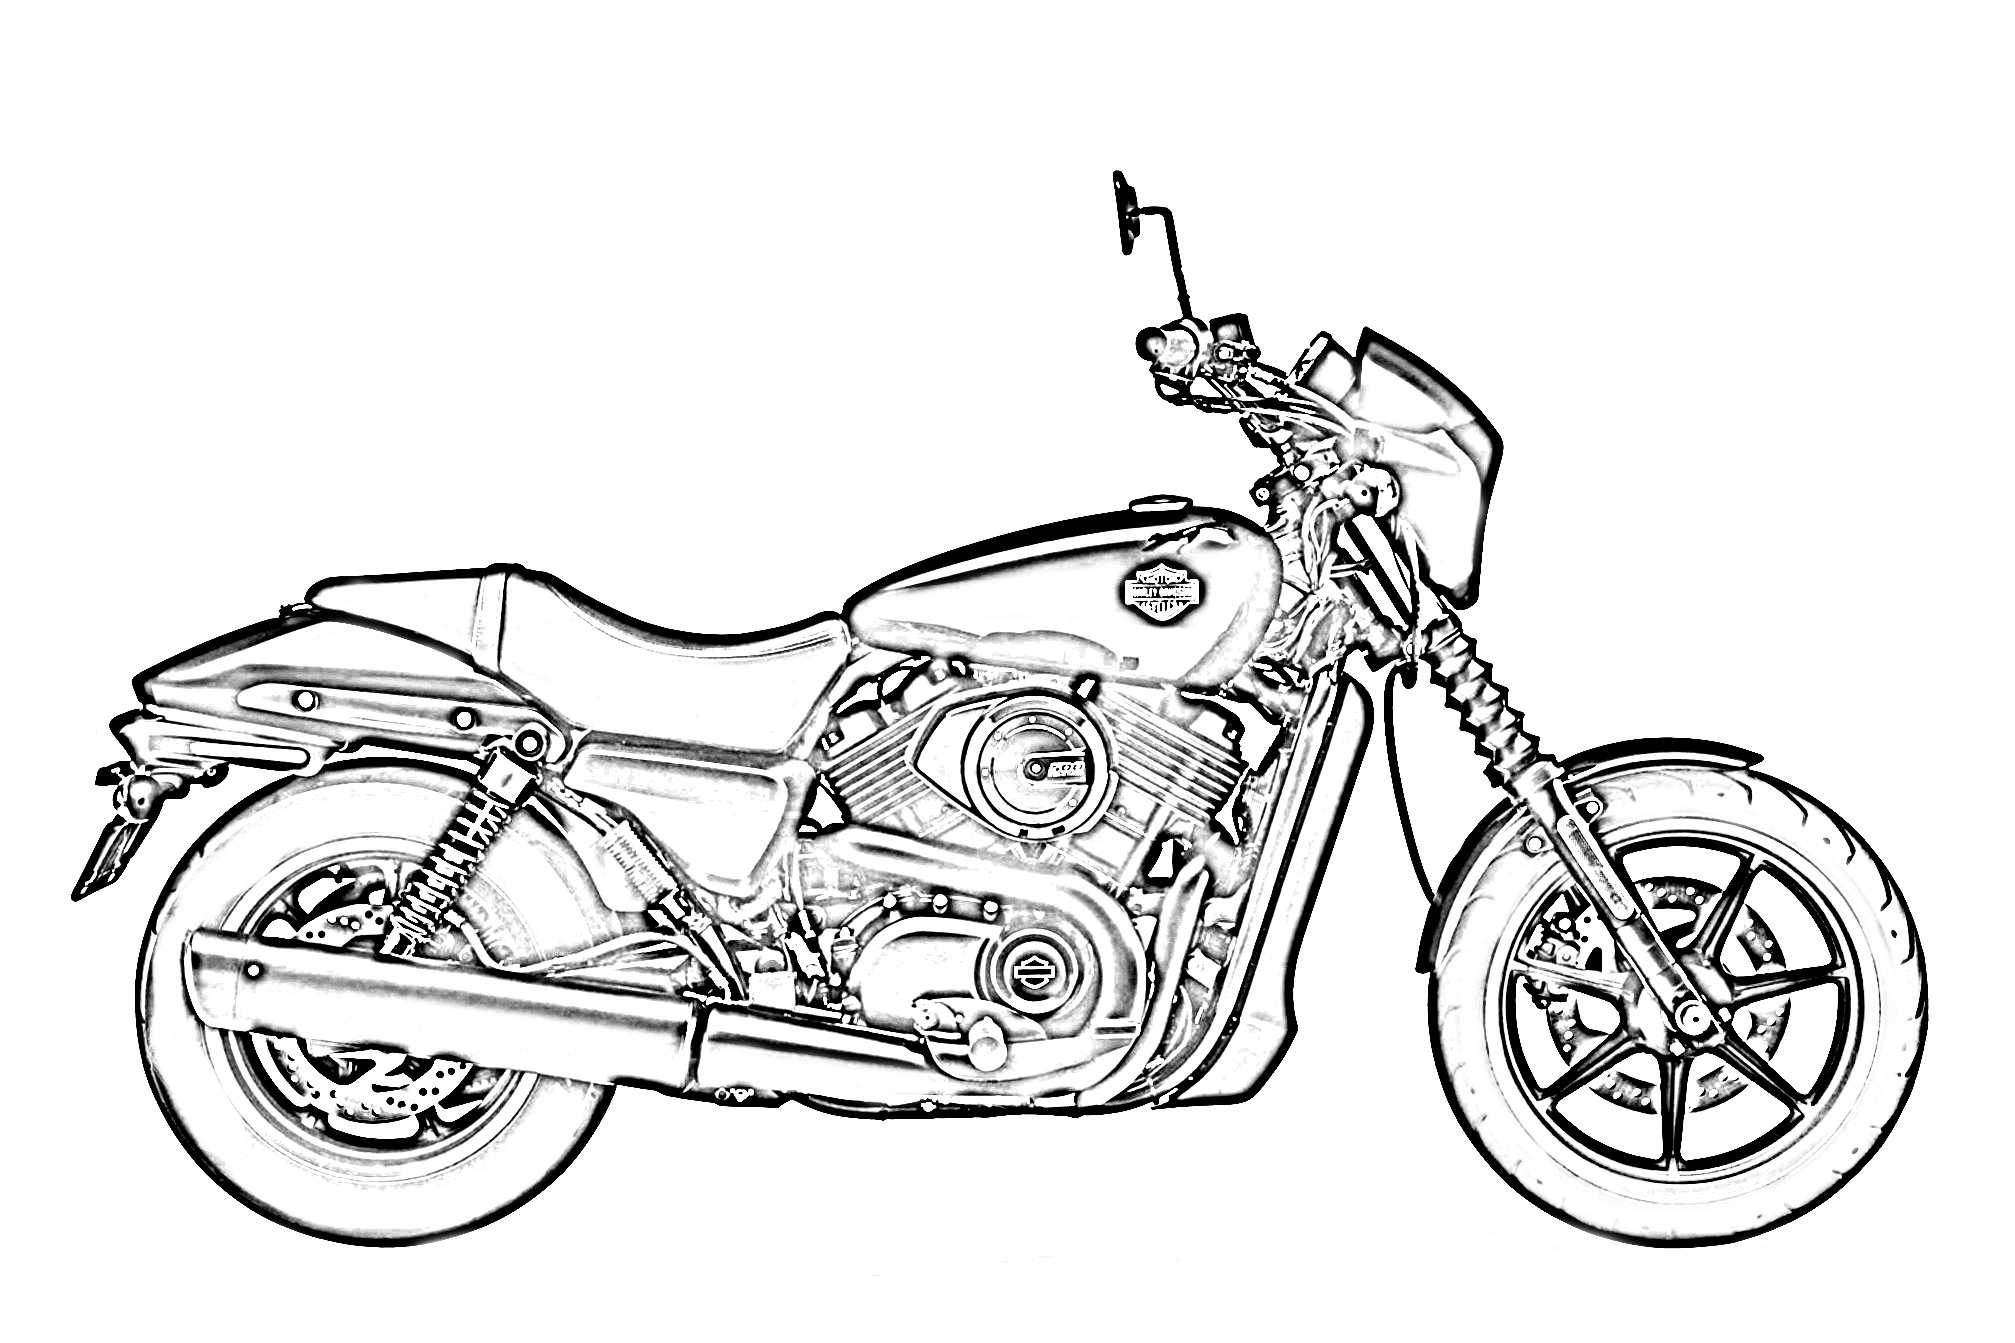 Harley Davidson 500 coloring page